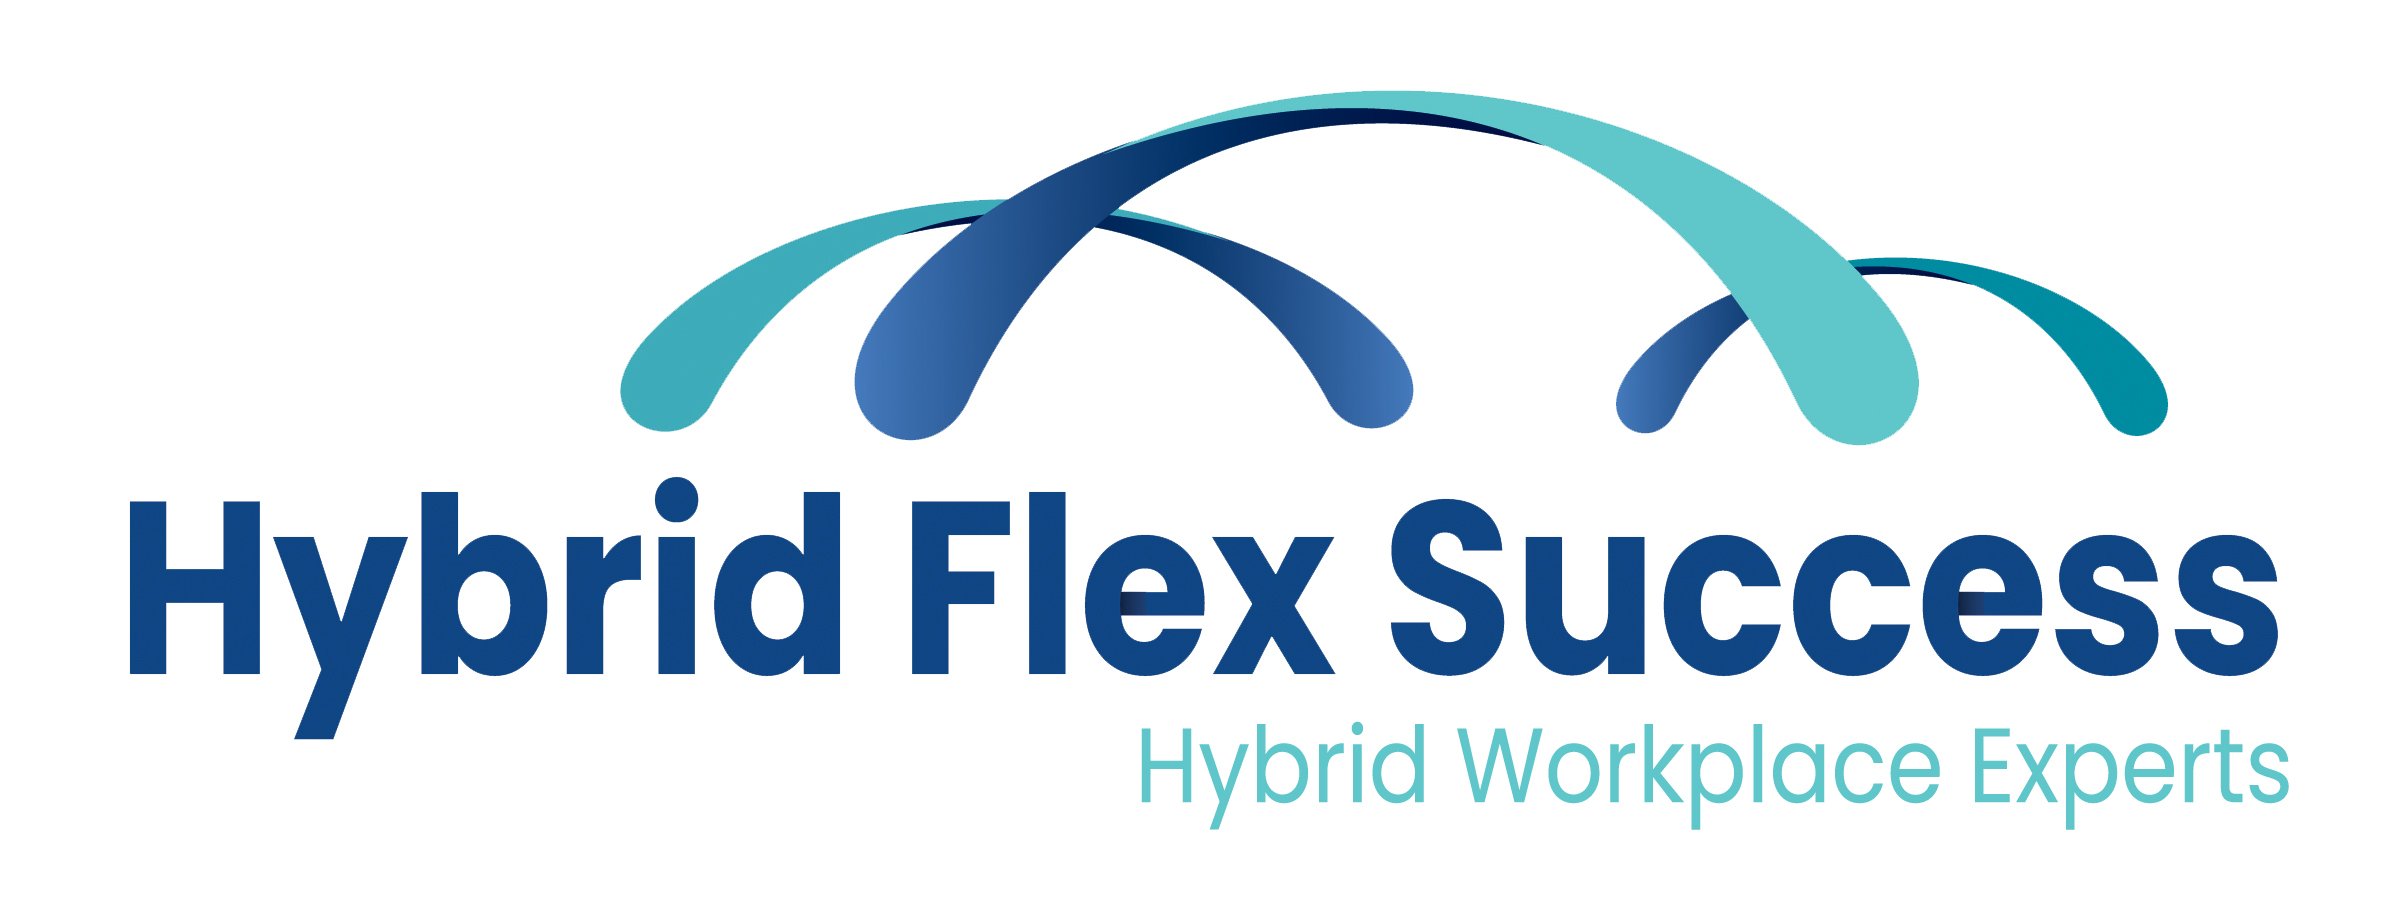 Hybrid Flex Success